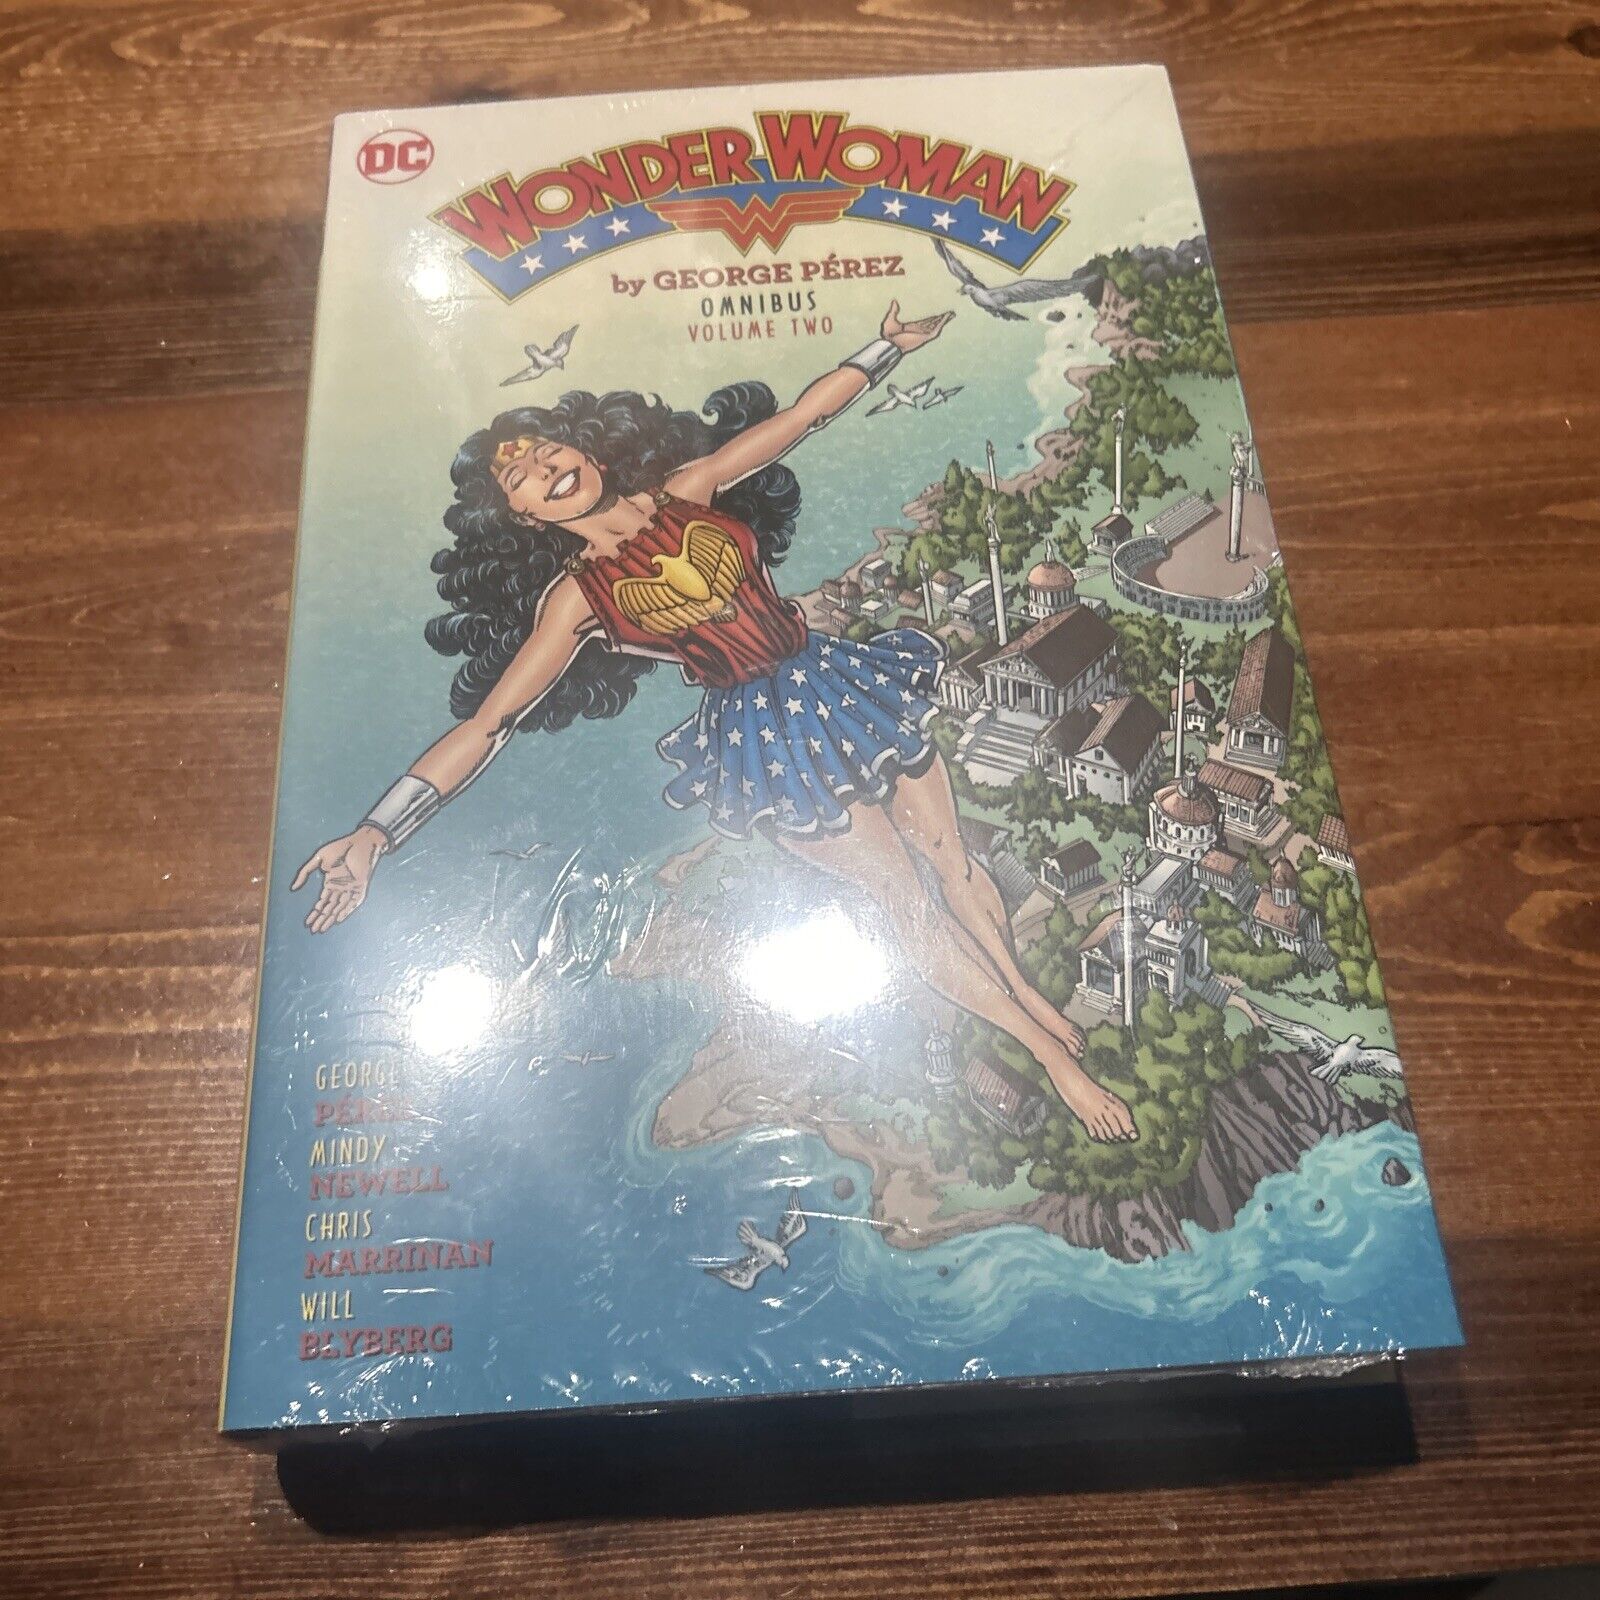 DC Comics Wonder Woman By George Perez Omnibus vol. 2 - Hardcover